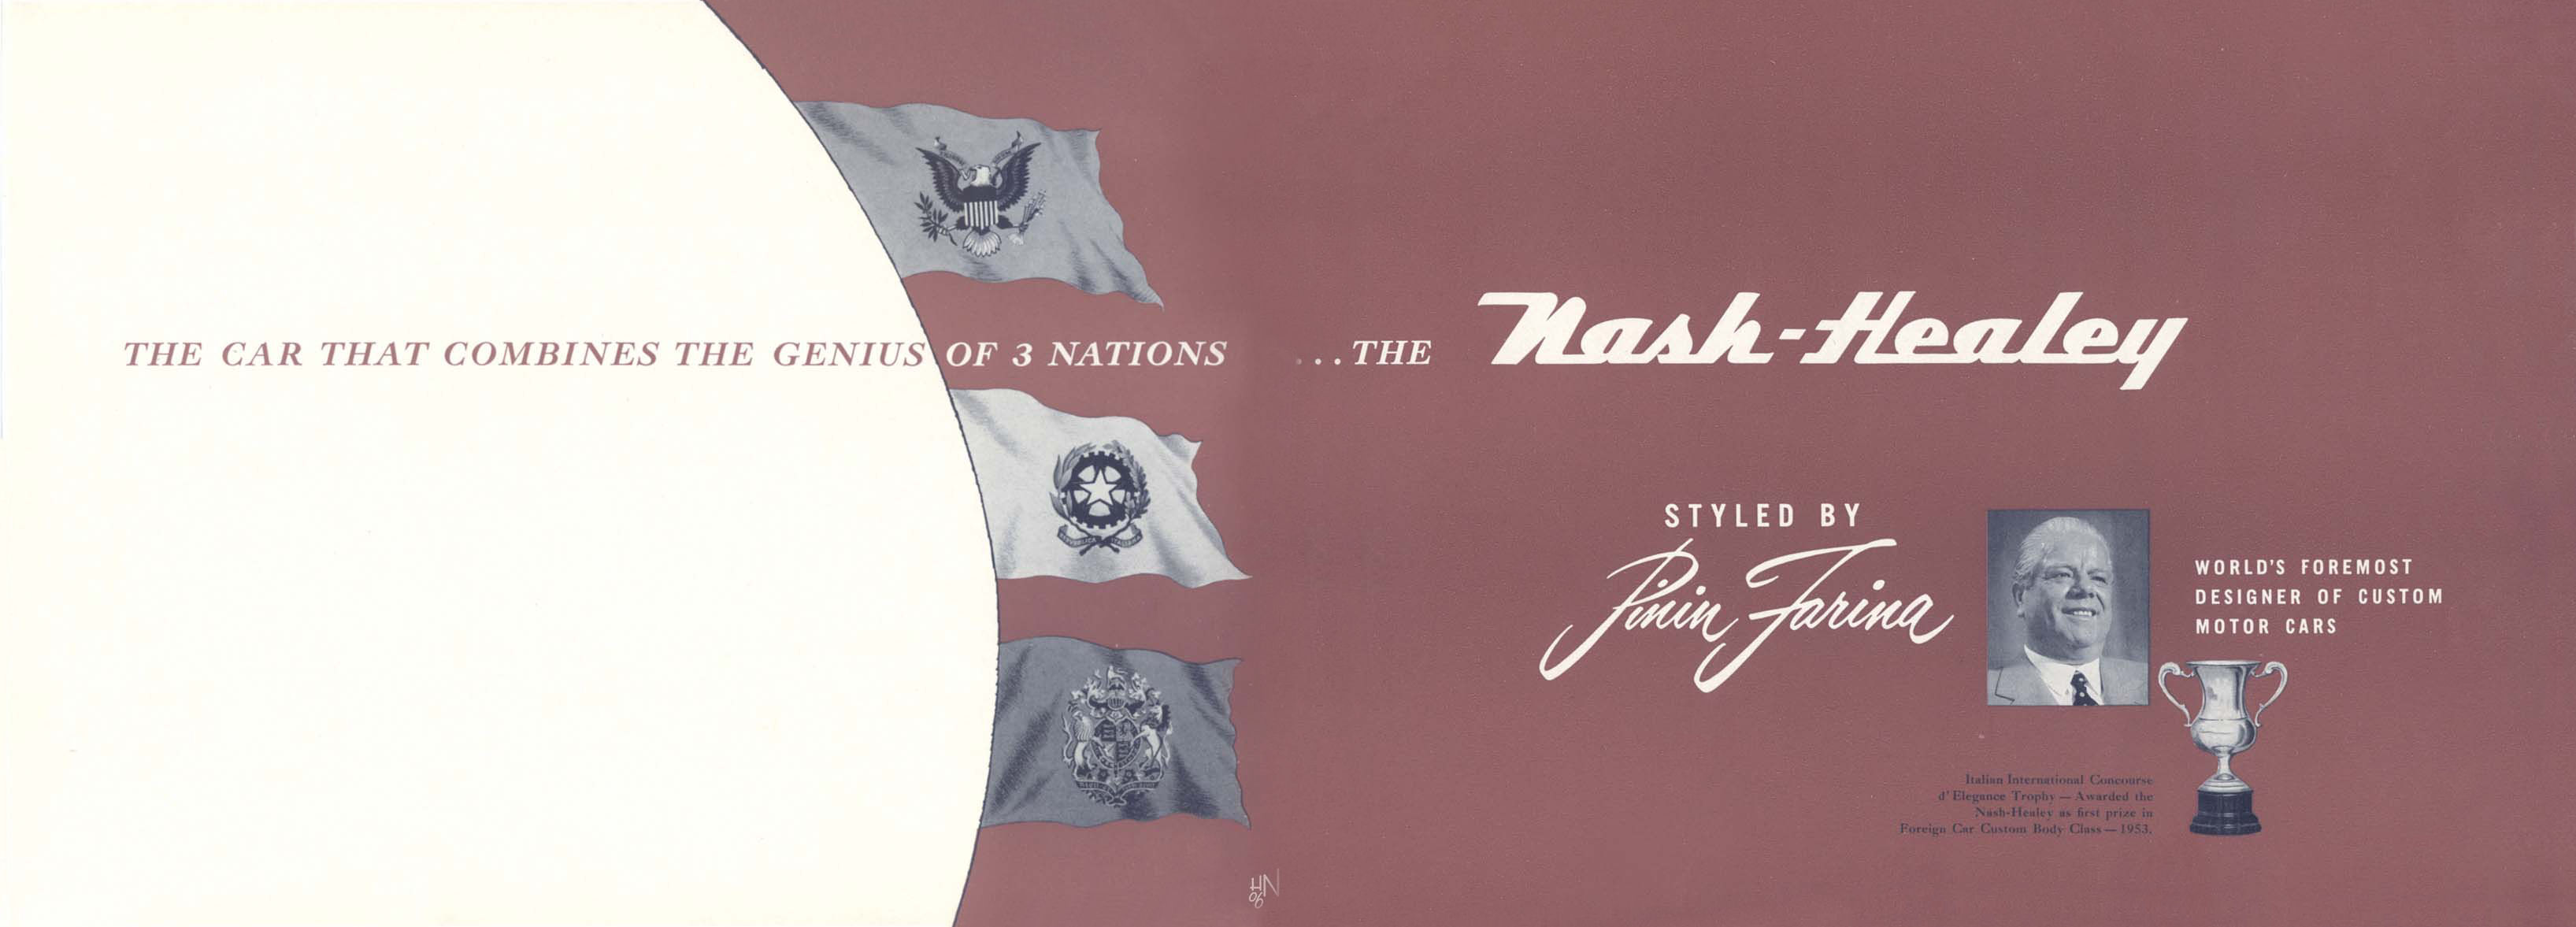 1953 Nash-Healey Brochure Page 3